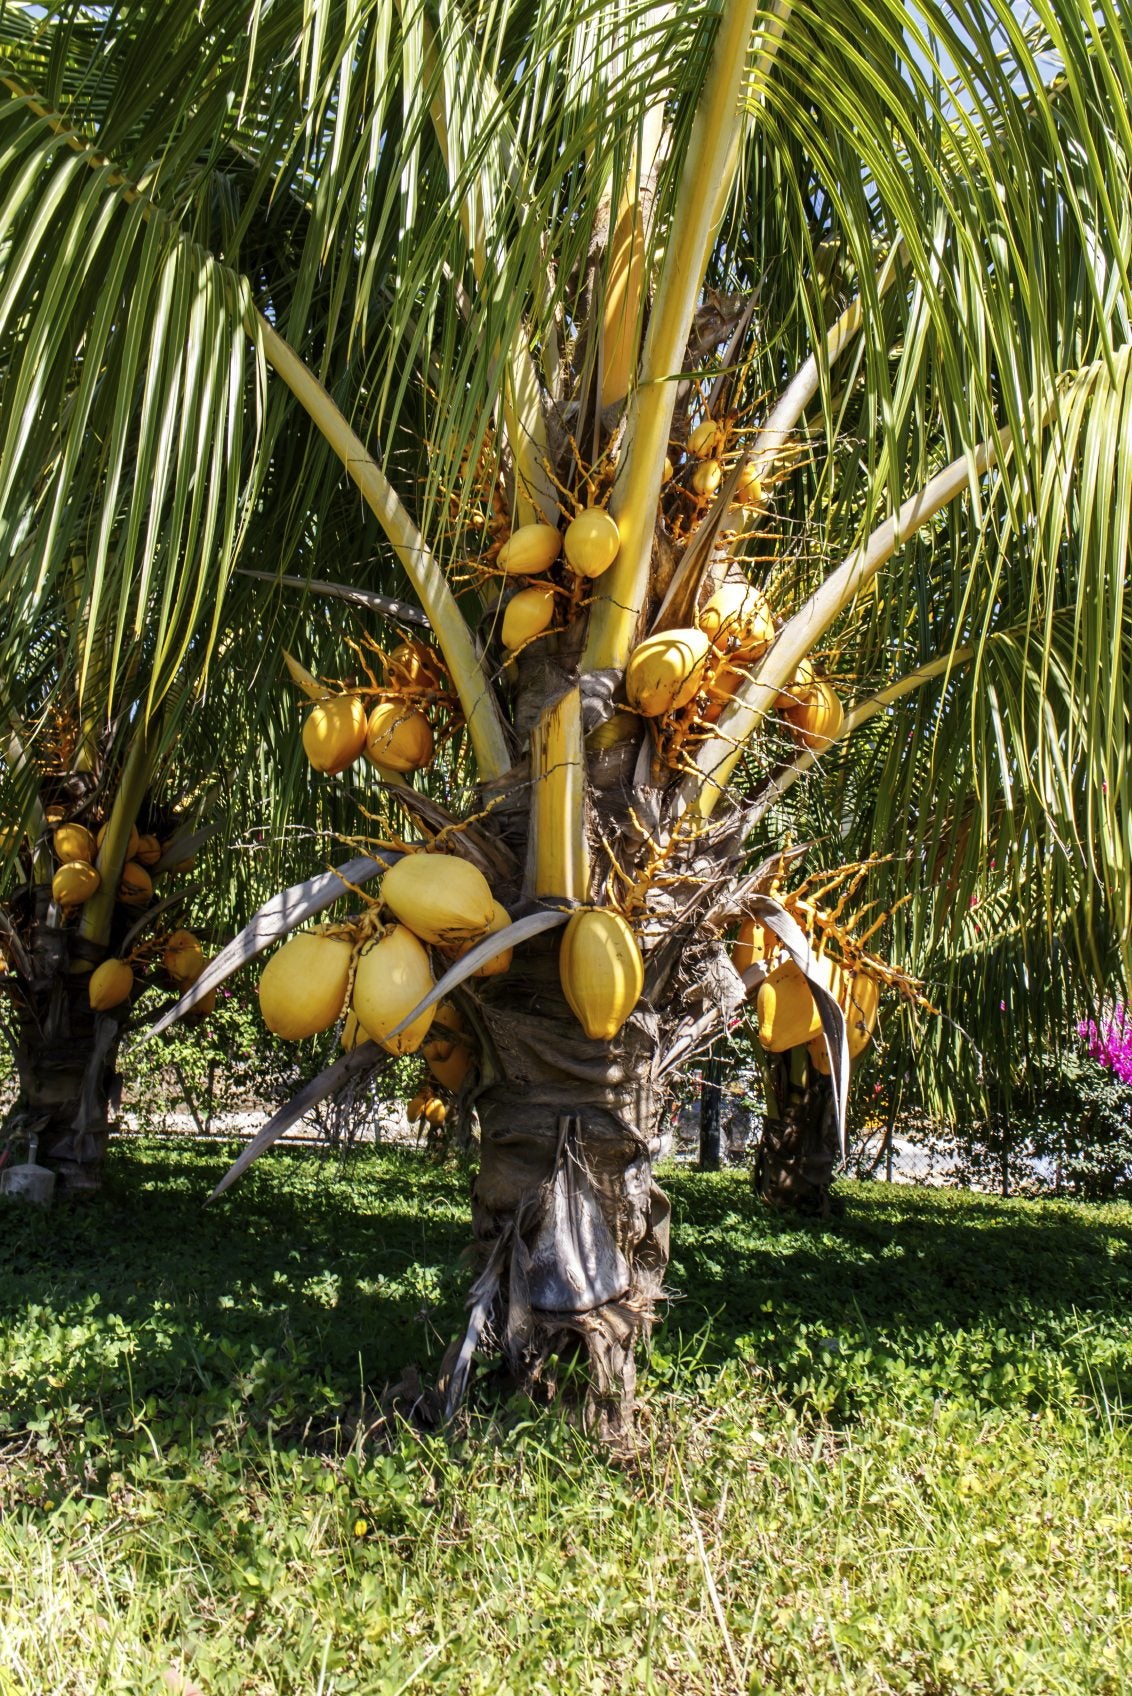 Identification of Coconut Trees vs Palm Trees